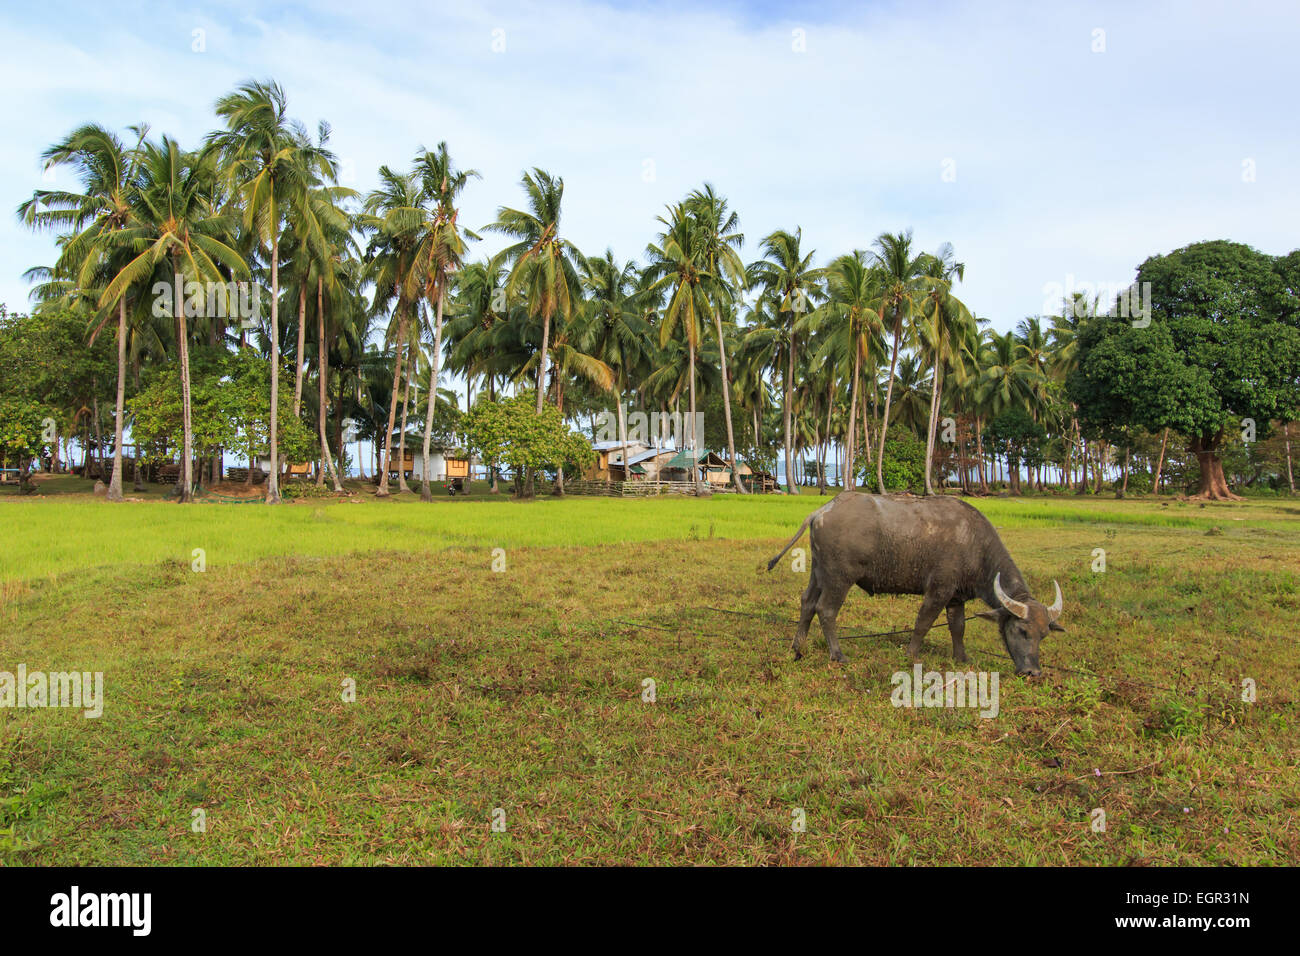 Rice field in Palawan, Philippines, with water buffalo (Carabao) Stock Photo